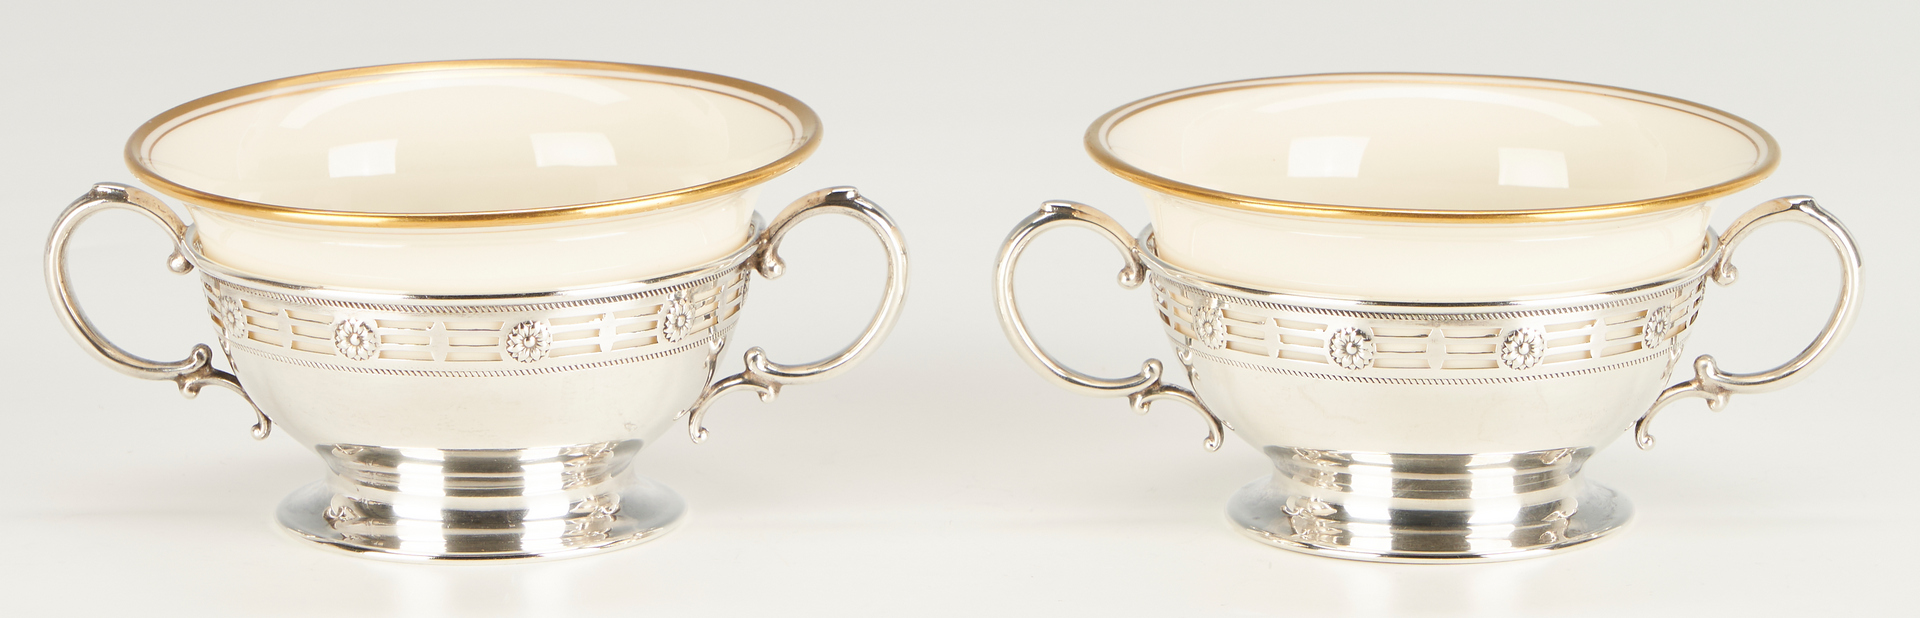 Lot 431: 30 Sterling Cups w/ Porcelain Inserts, Tiffany & Co, Webster, 42 pcs.